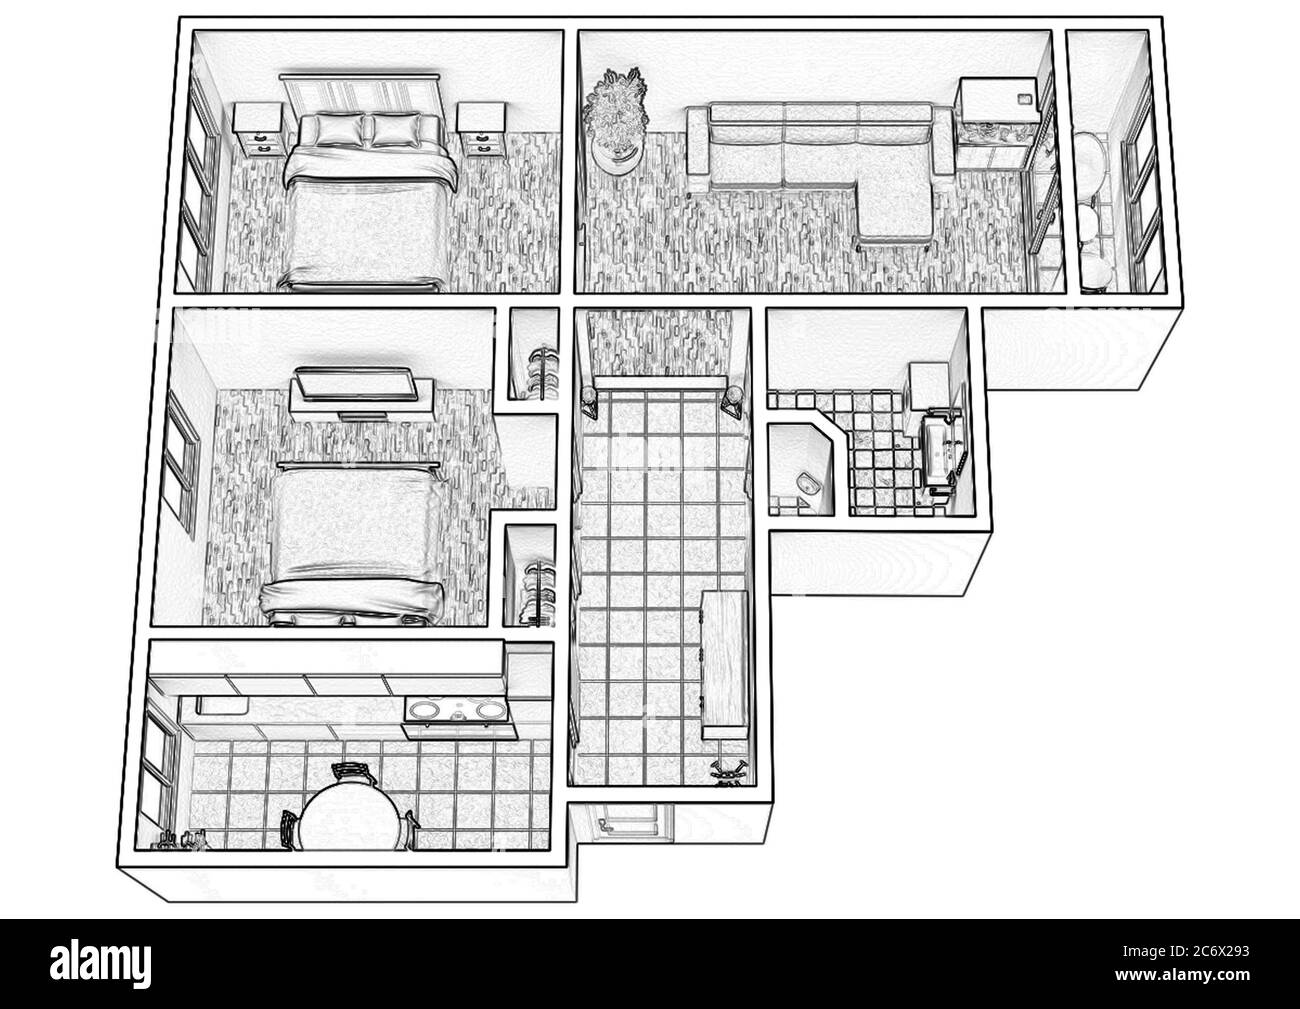 Sketch Floor Plan to 3D in Sketchup